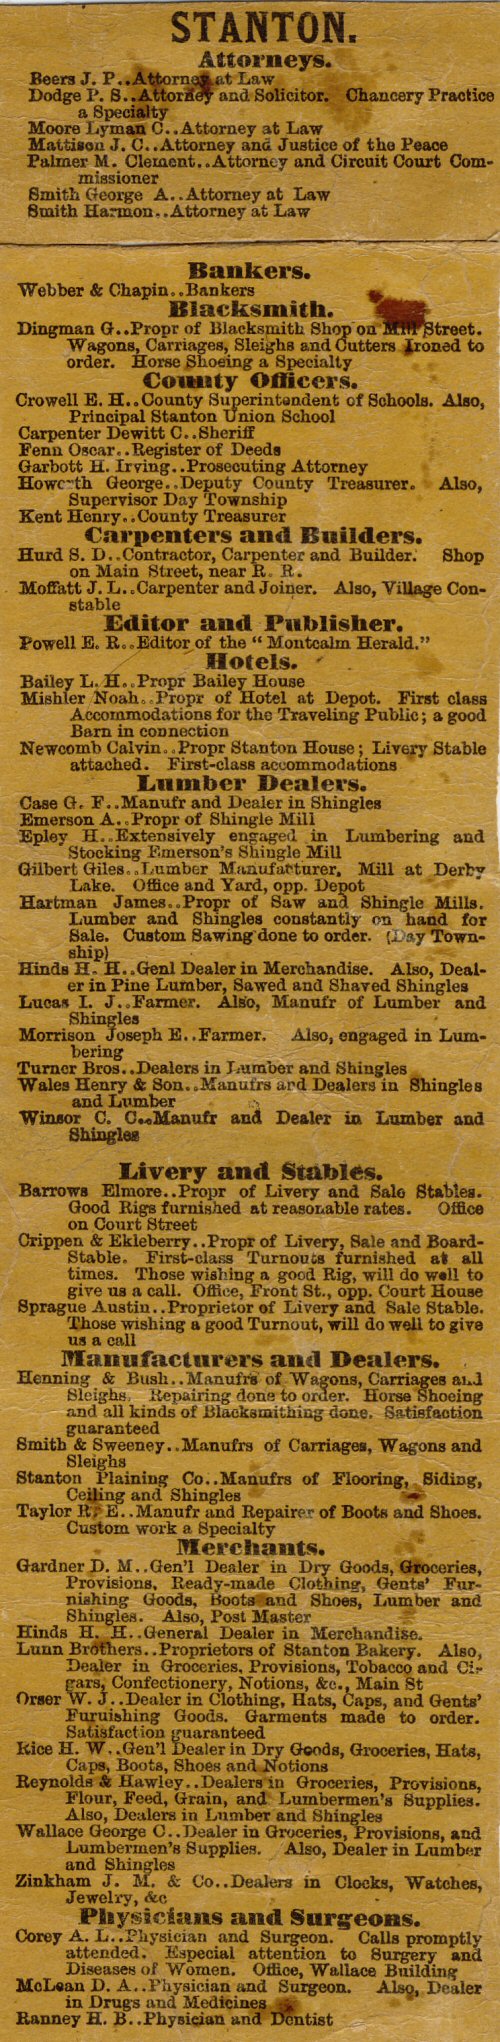 1875 Stanton Directory